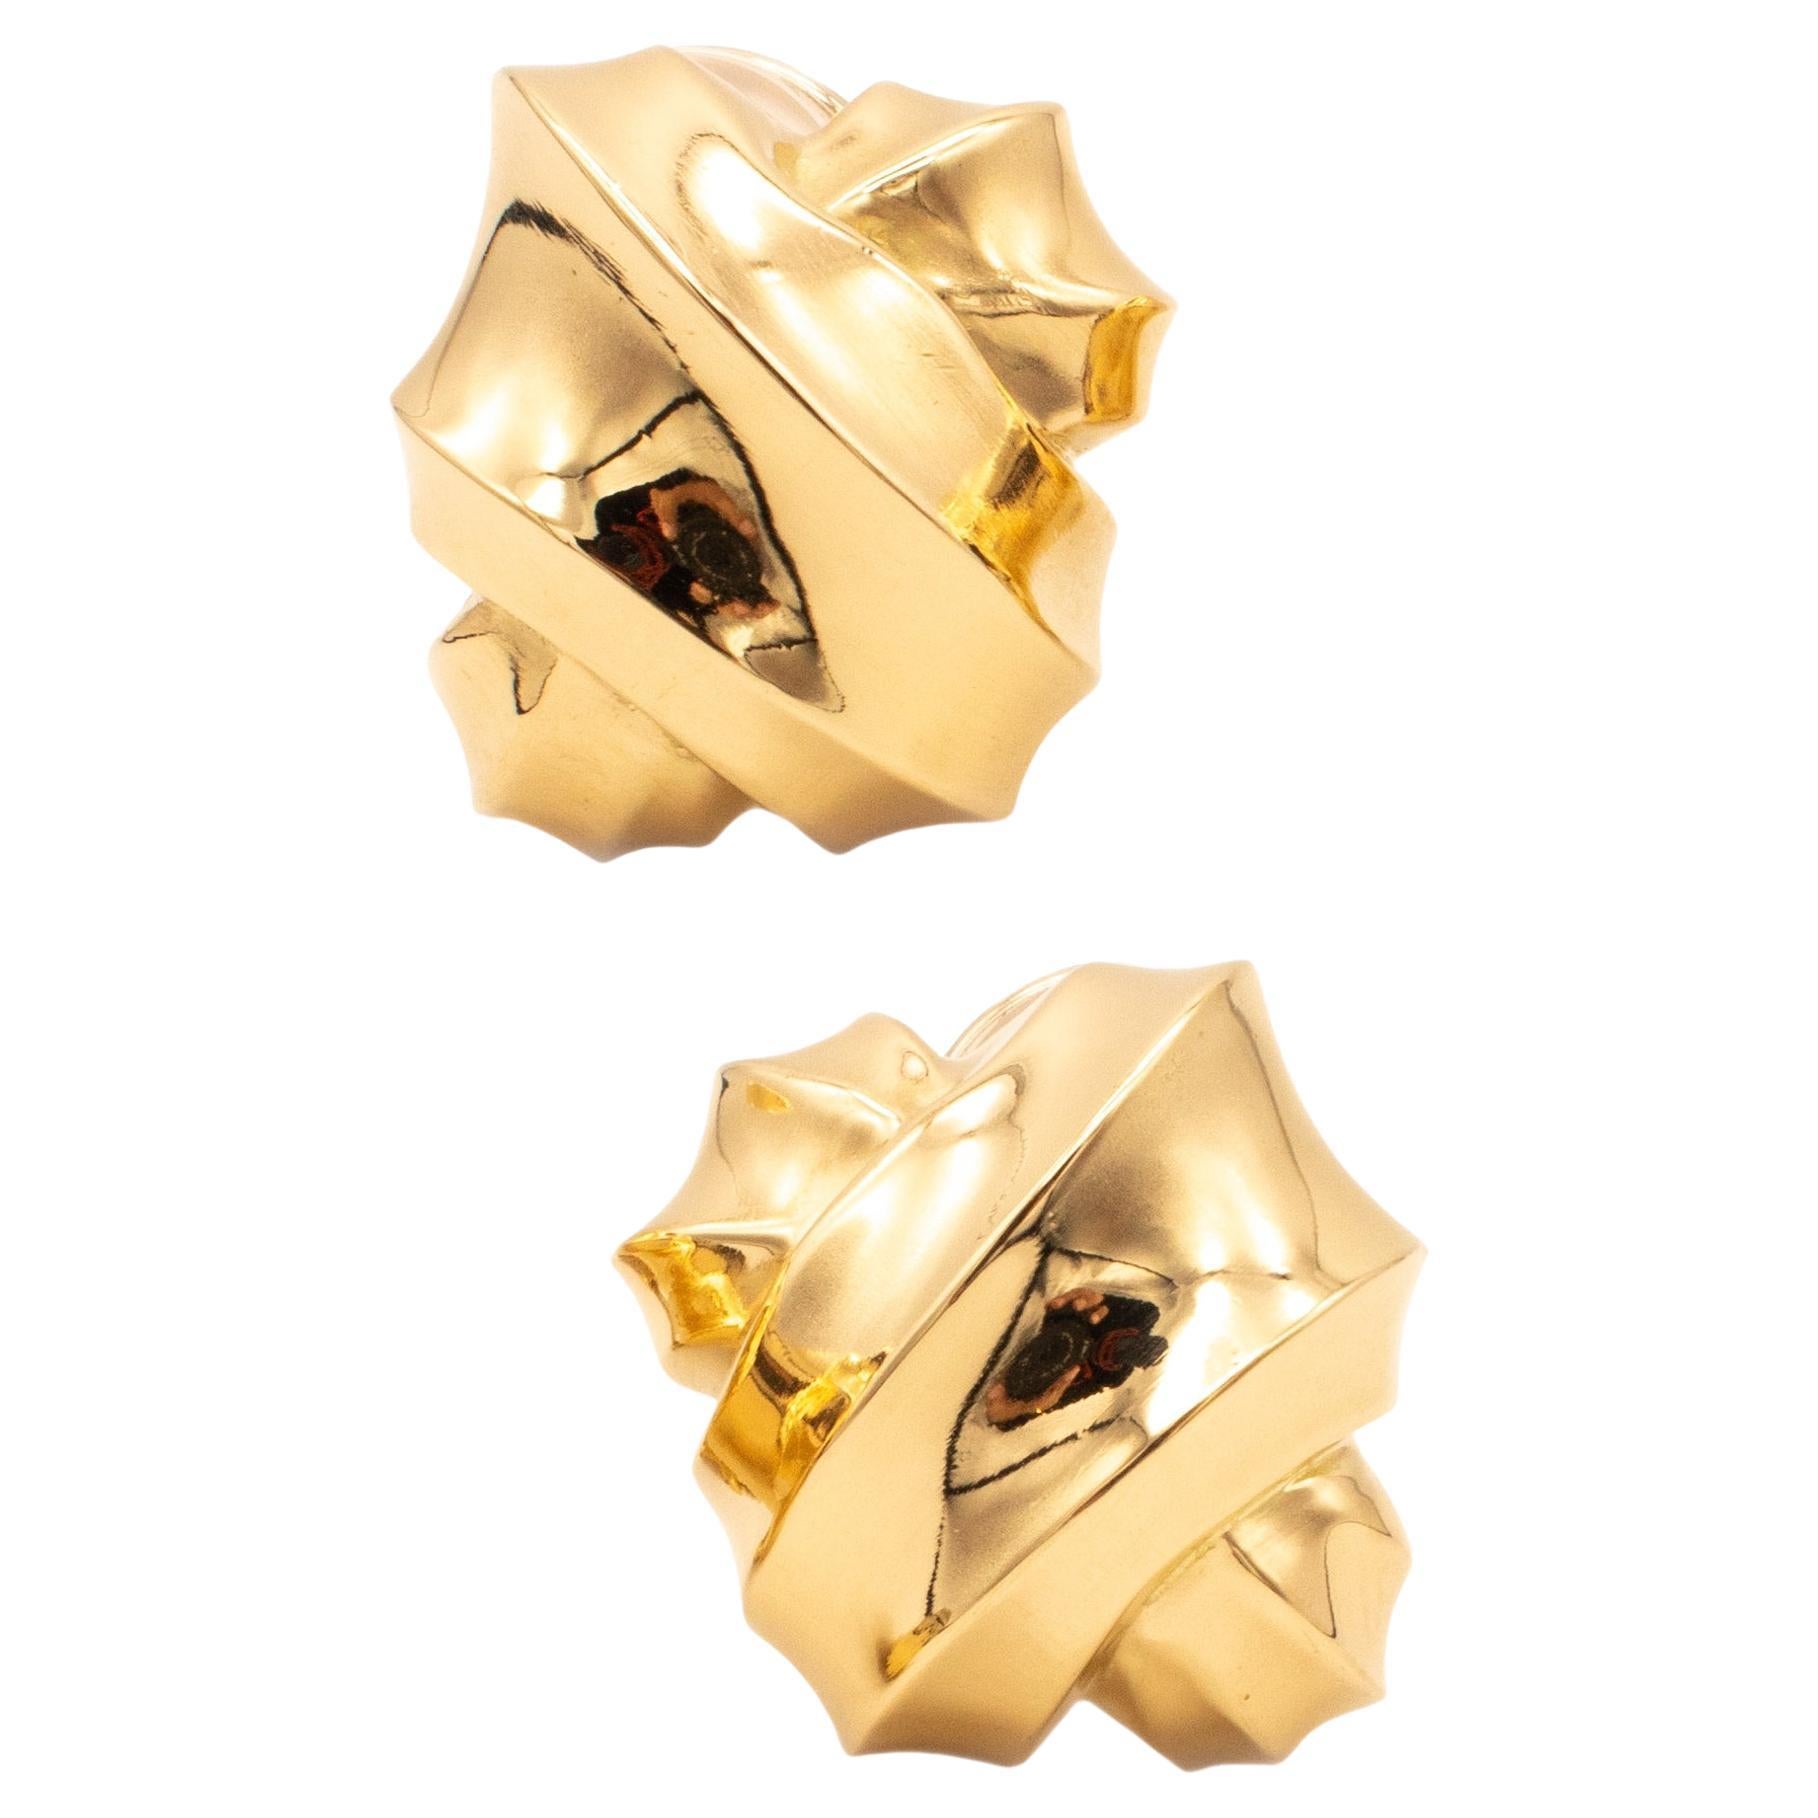 Angela Cummings 1984 Studio Rare Geometric Earrings in Solid 18Kt Yellow Gold